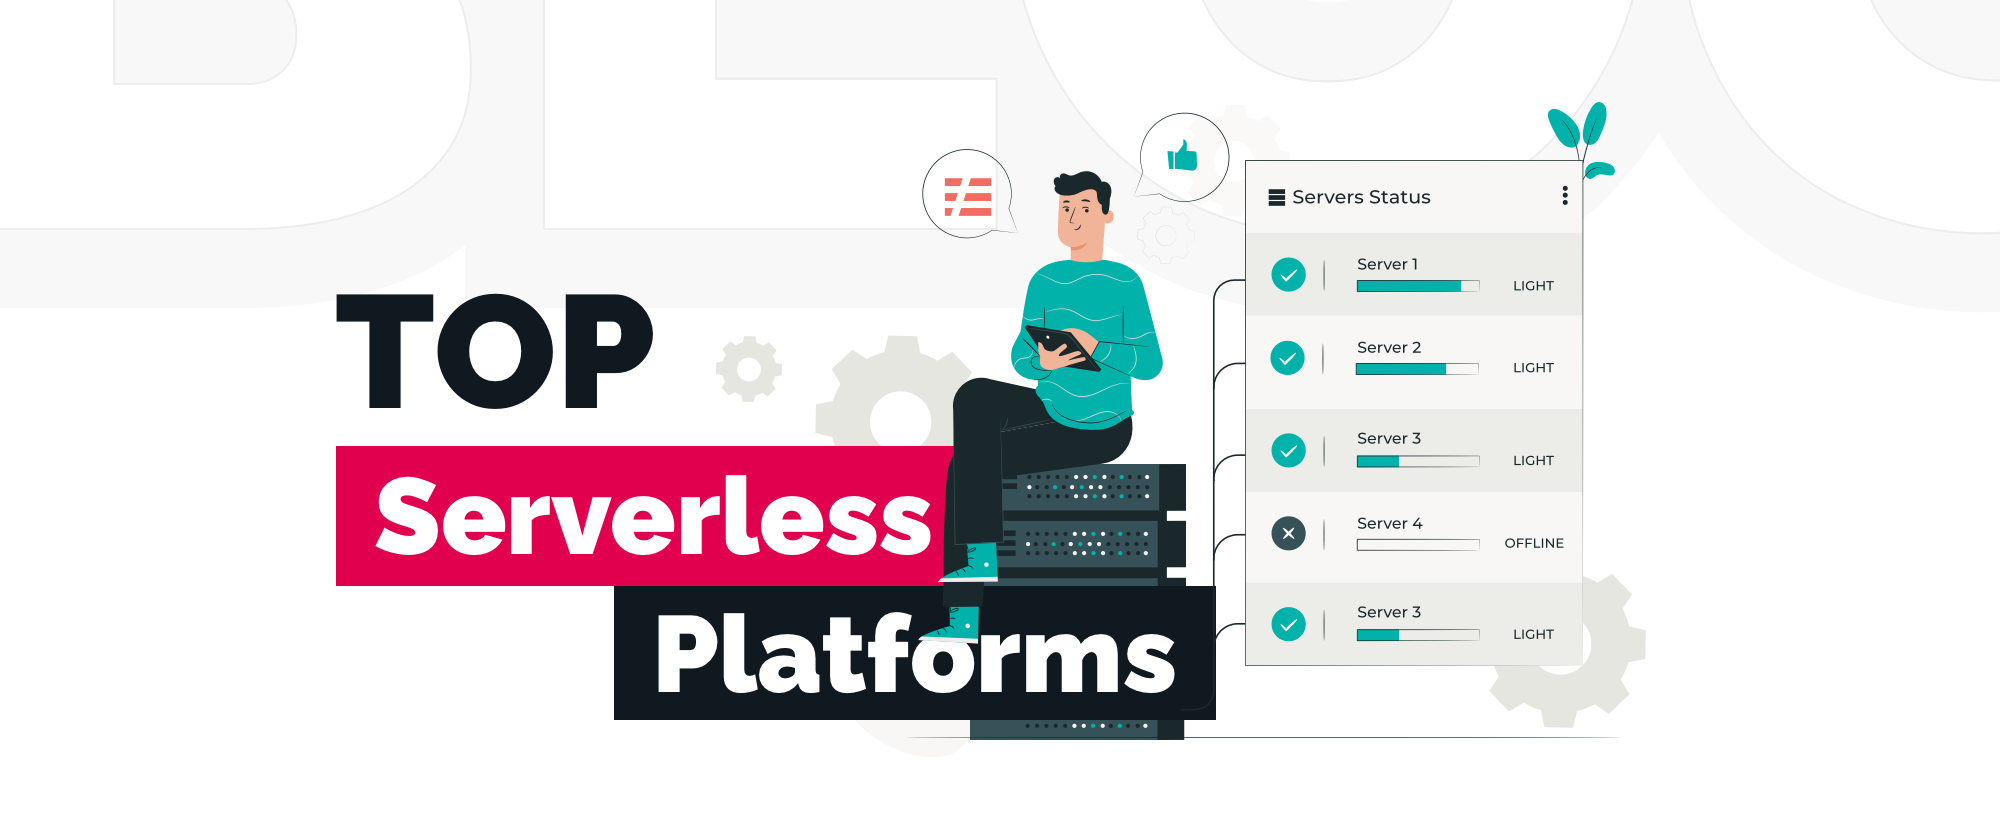 Top 5 Serverless Platforms in 2022